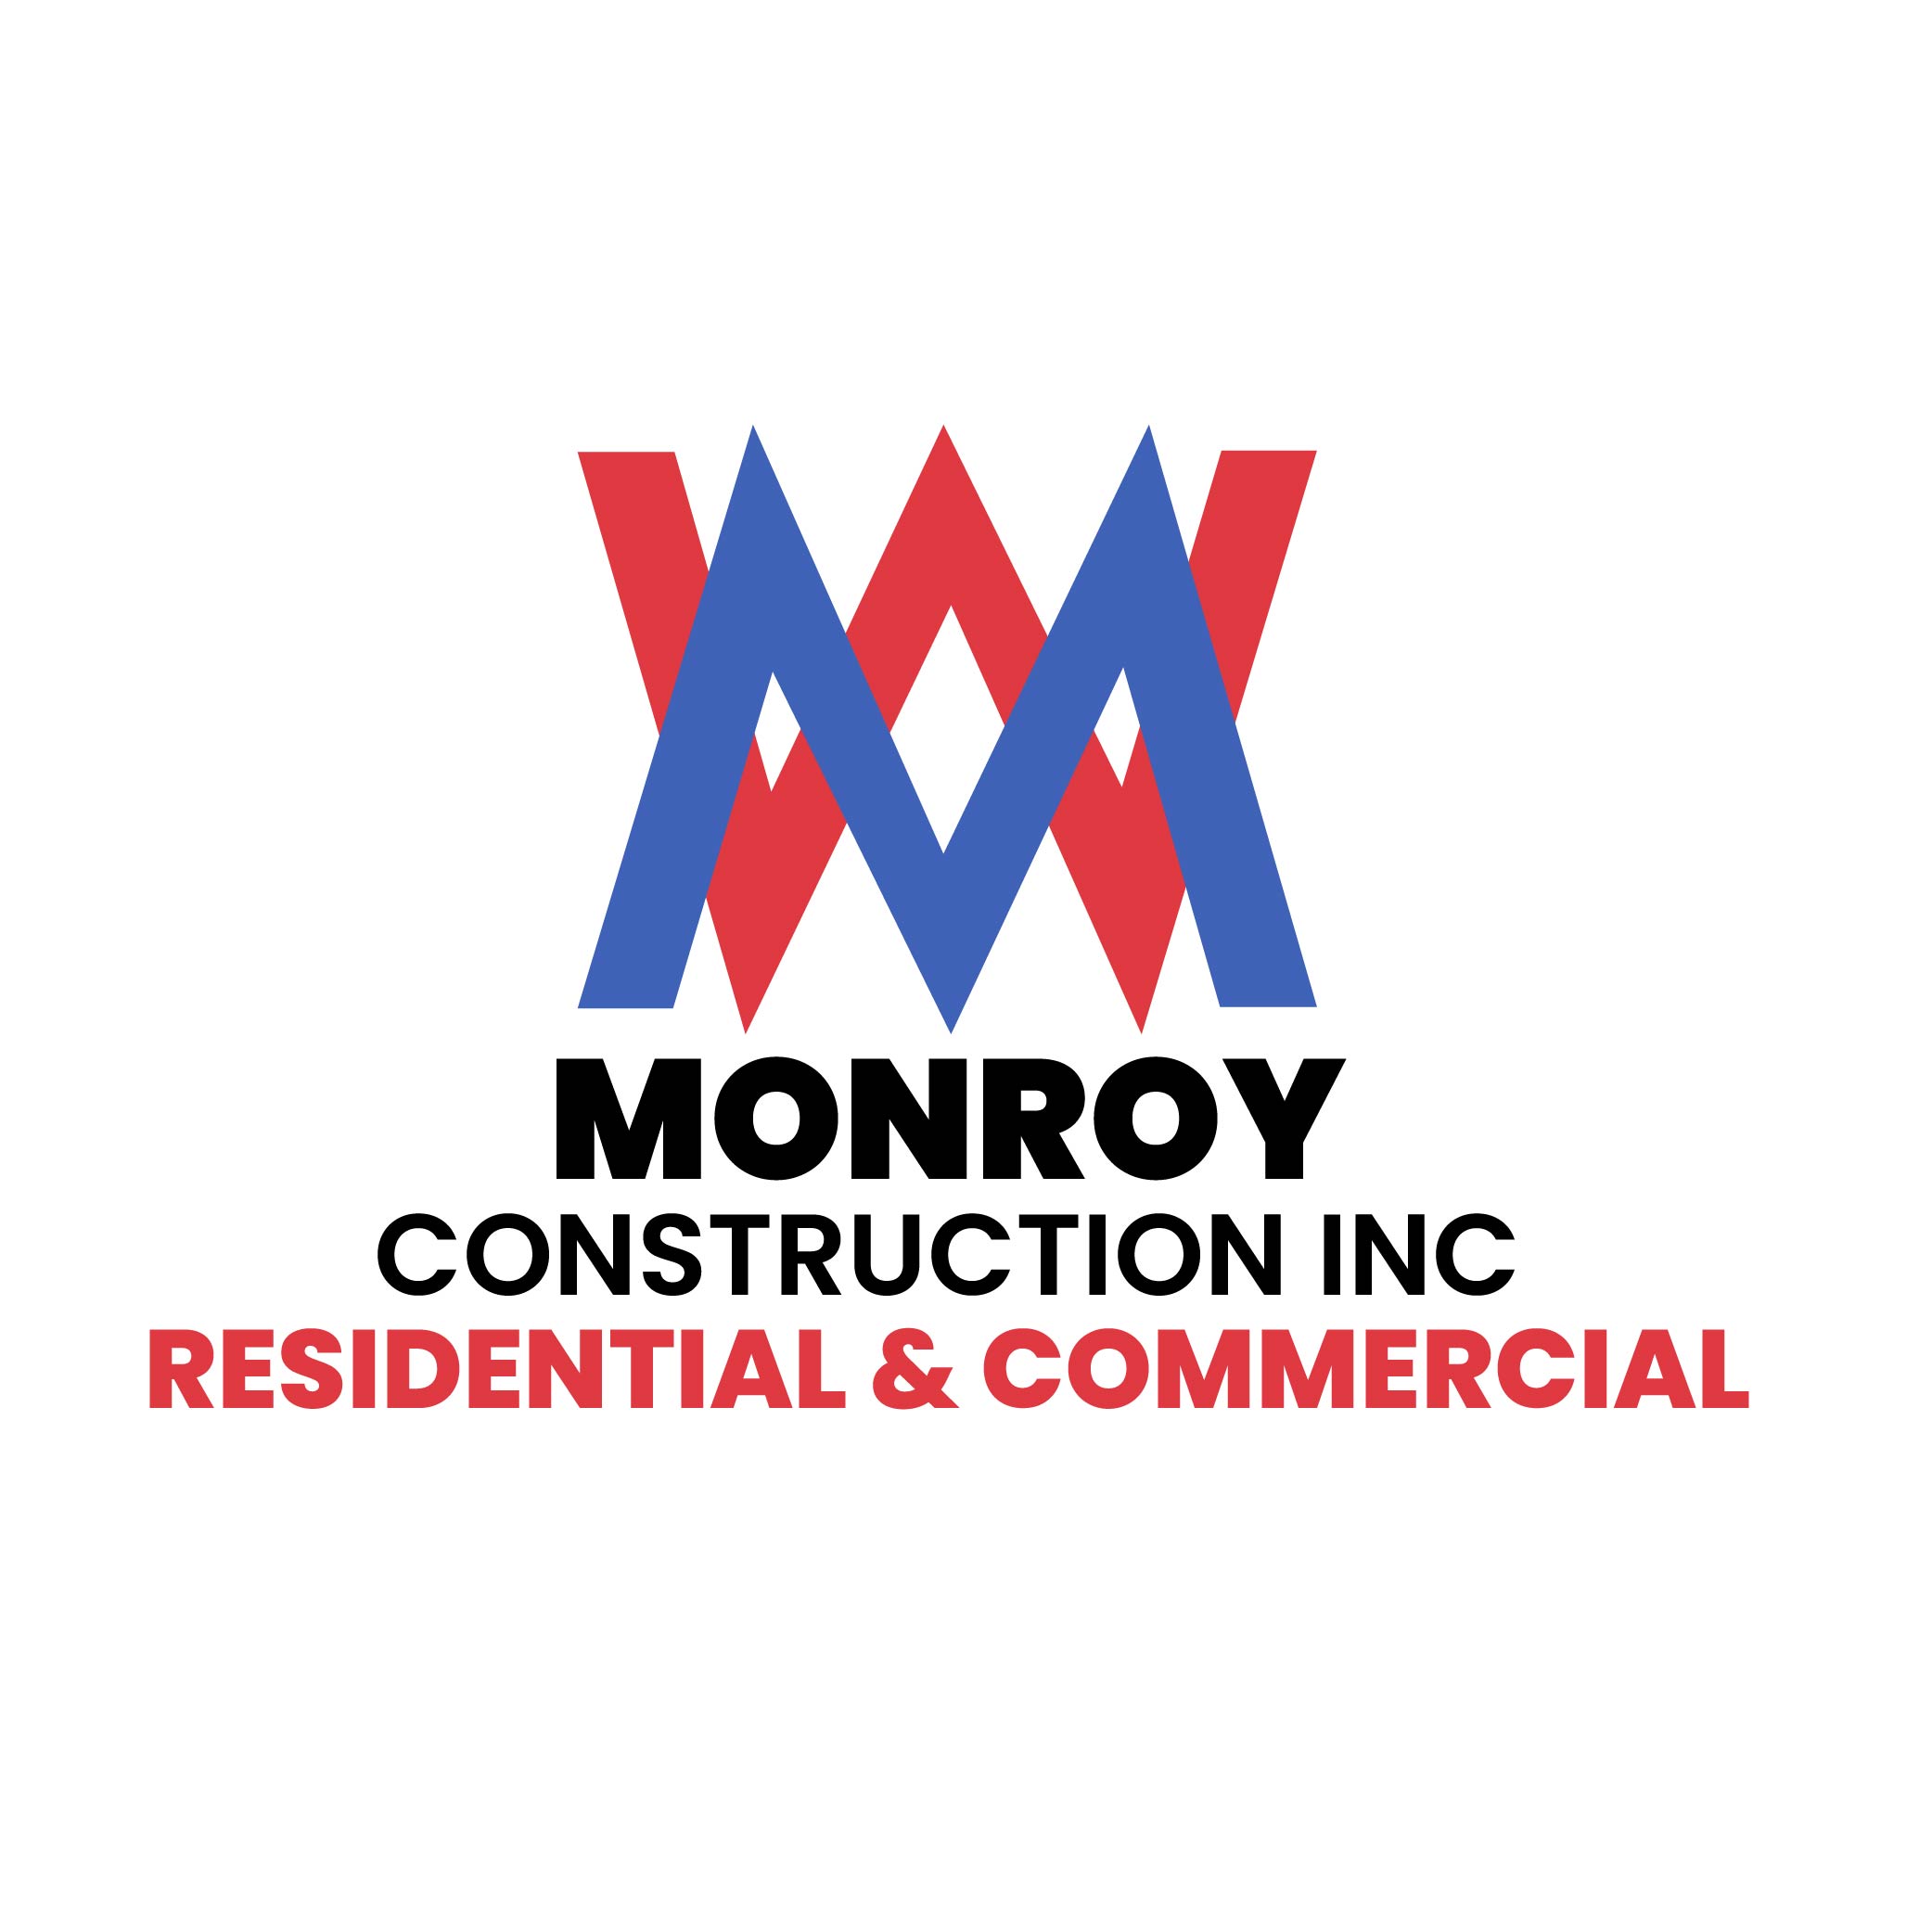 MW Monroy Construction Inc